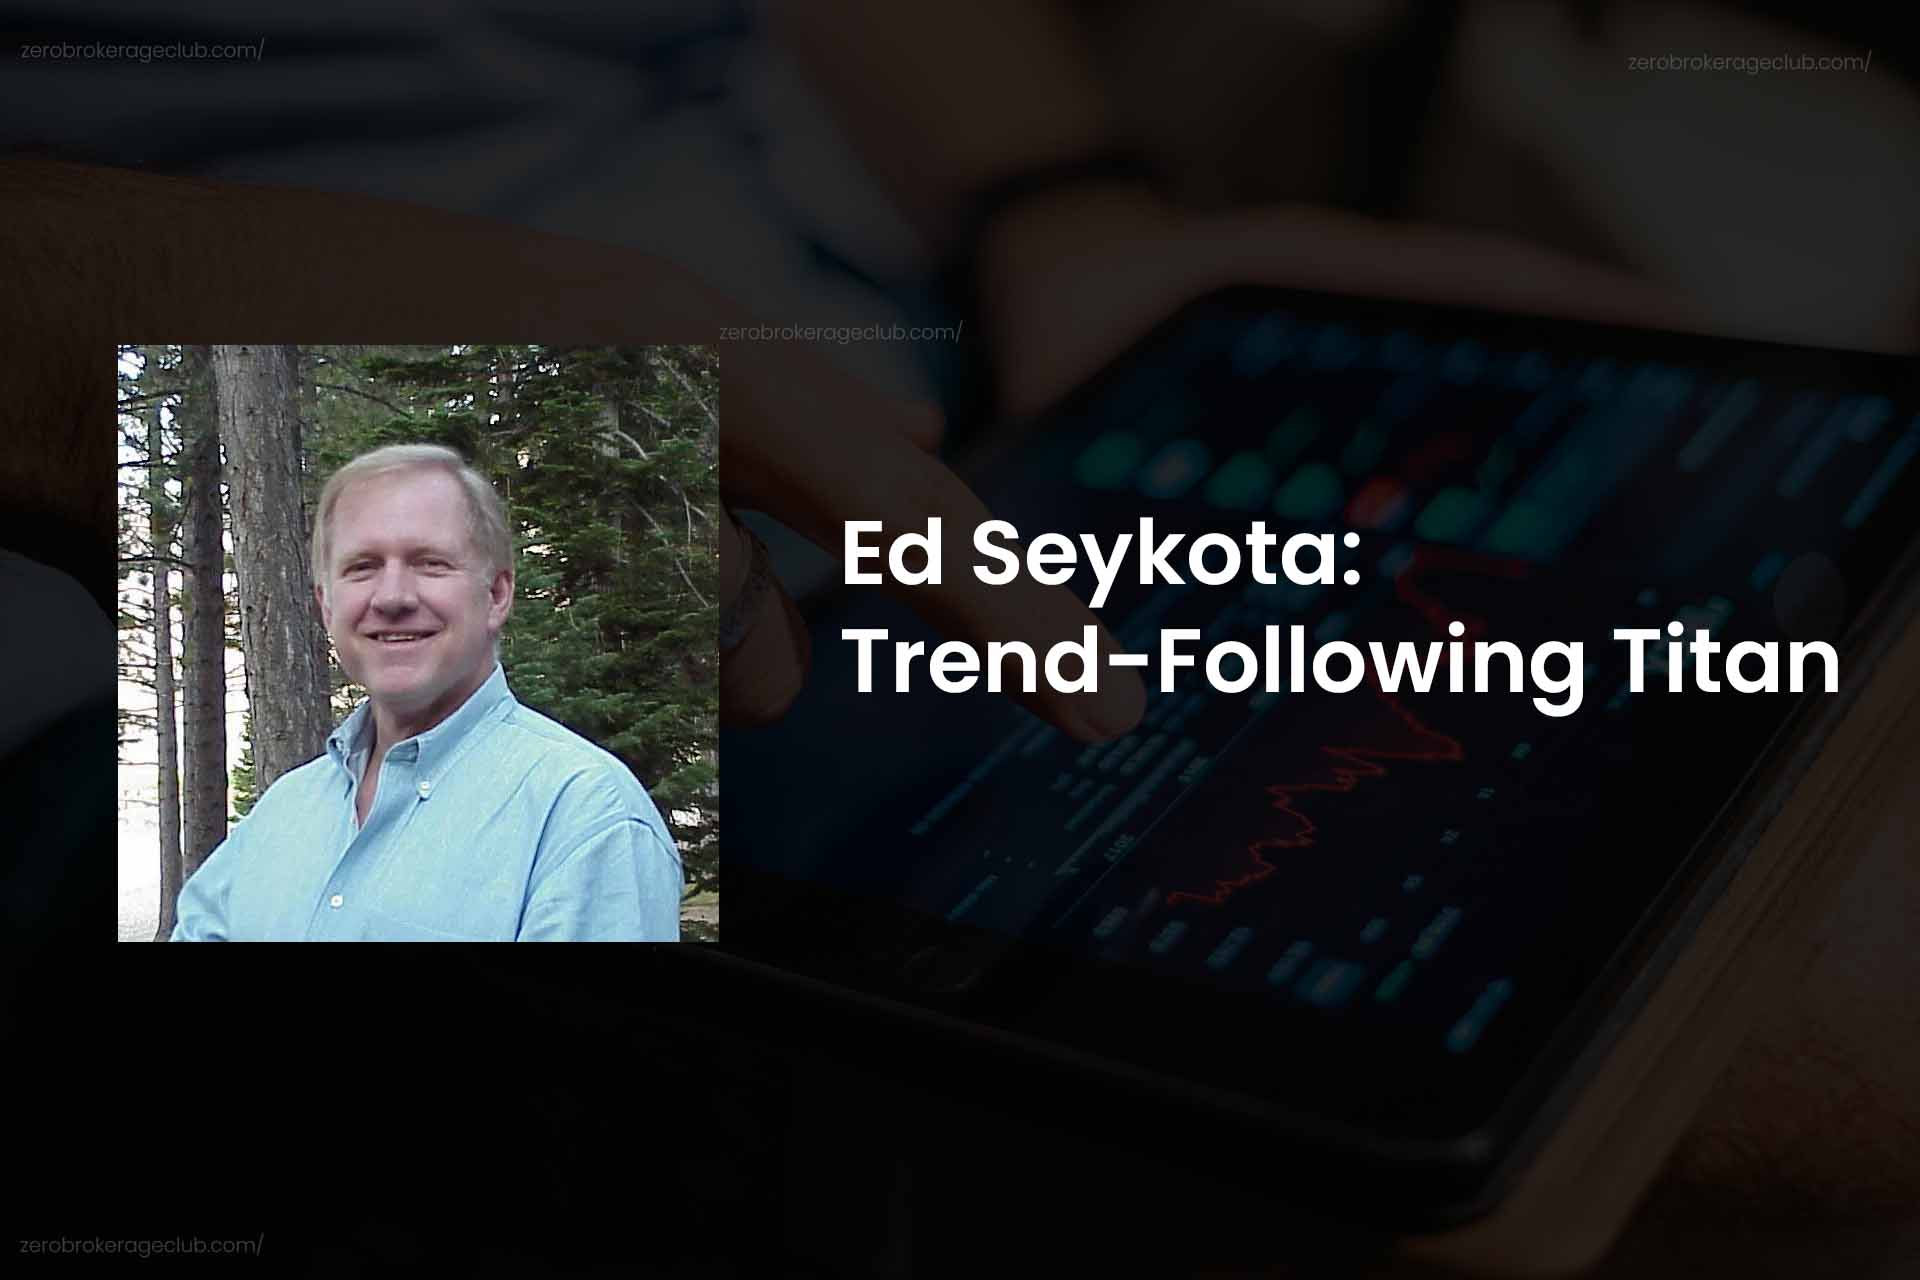 Ed Seykota: The Trend-Following Titan